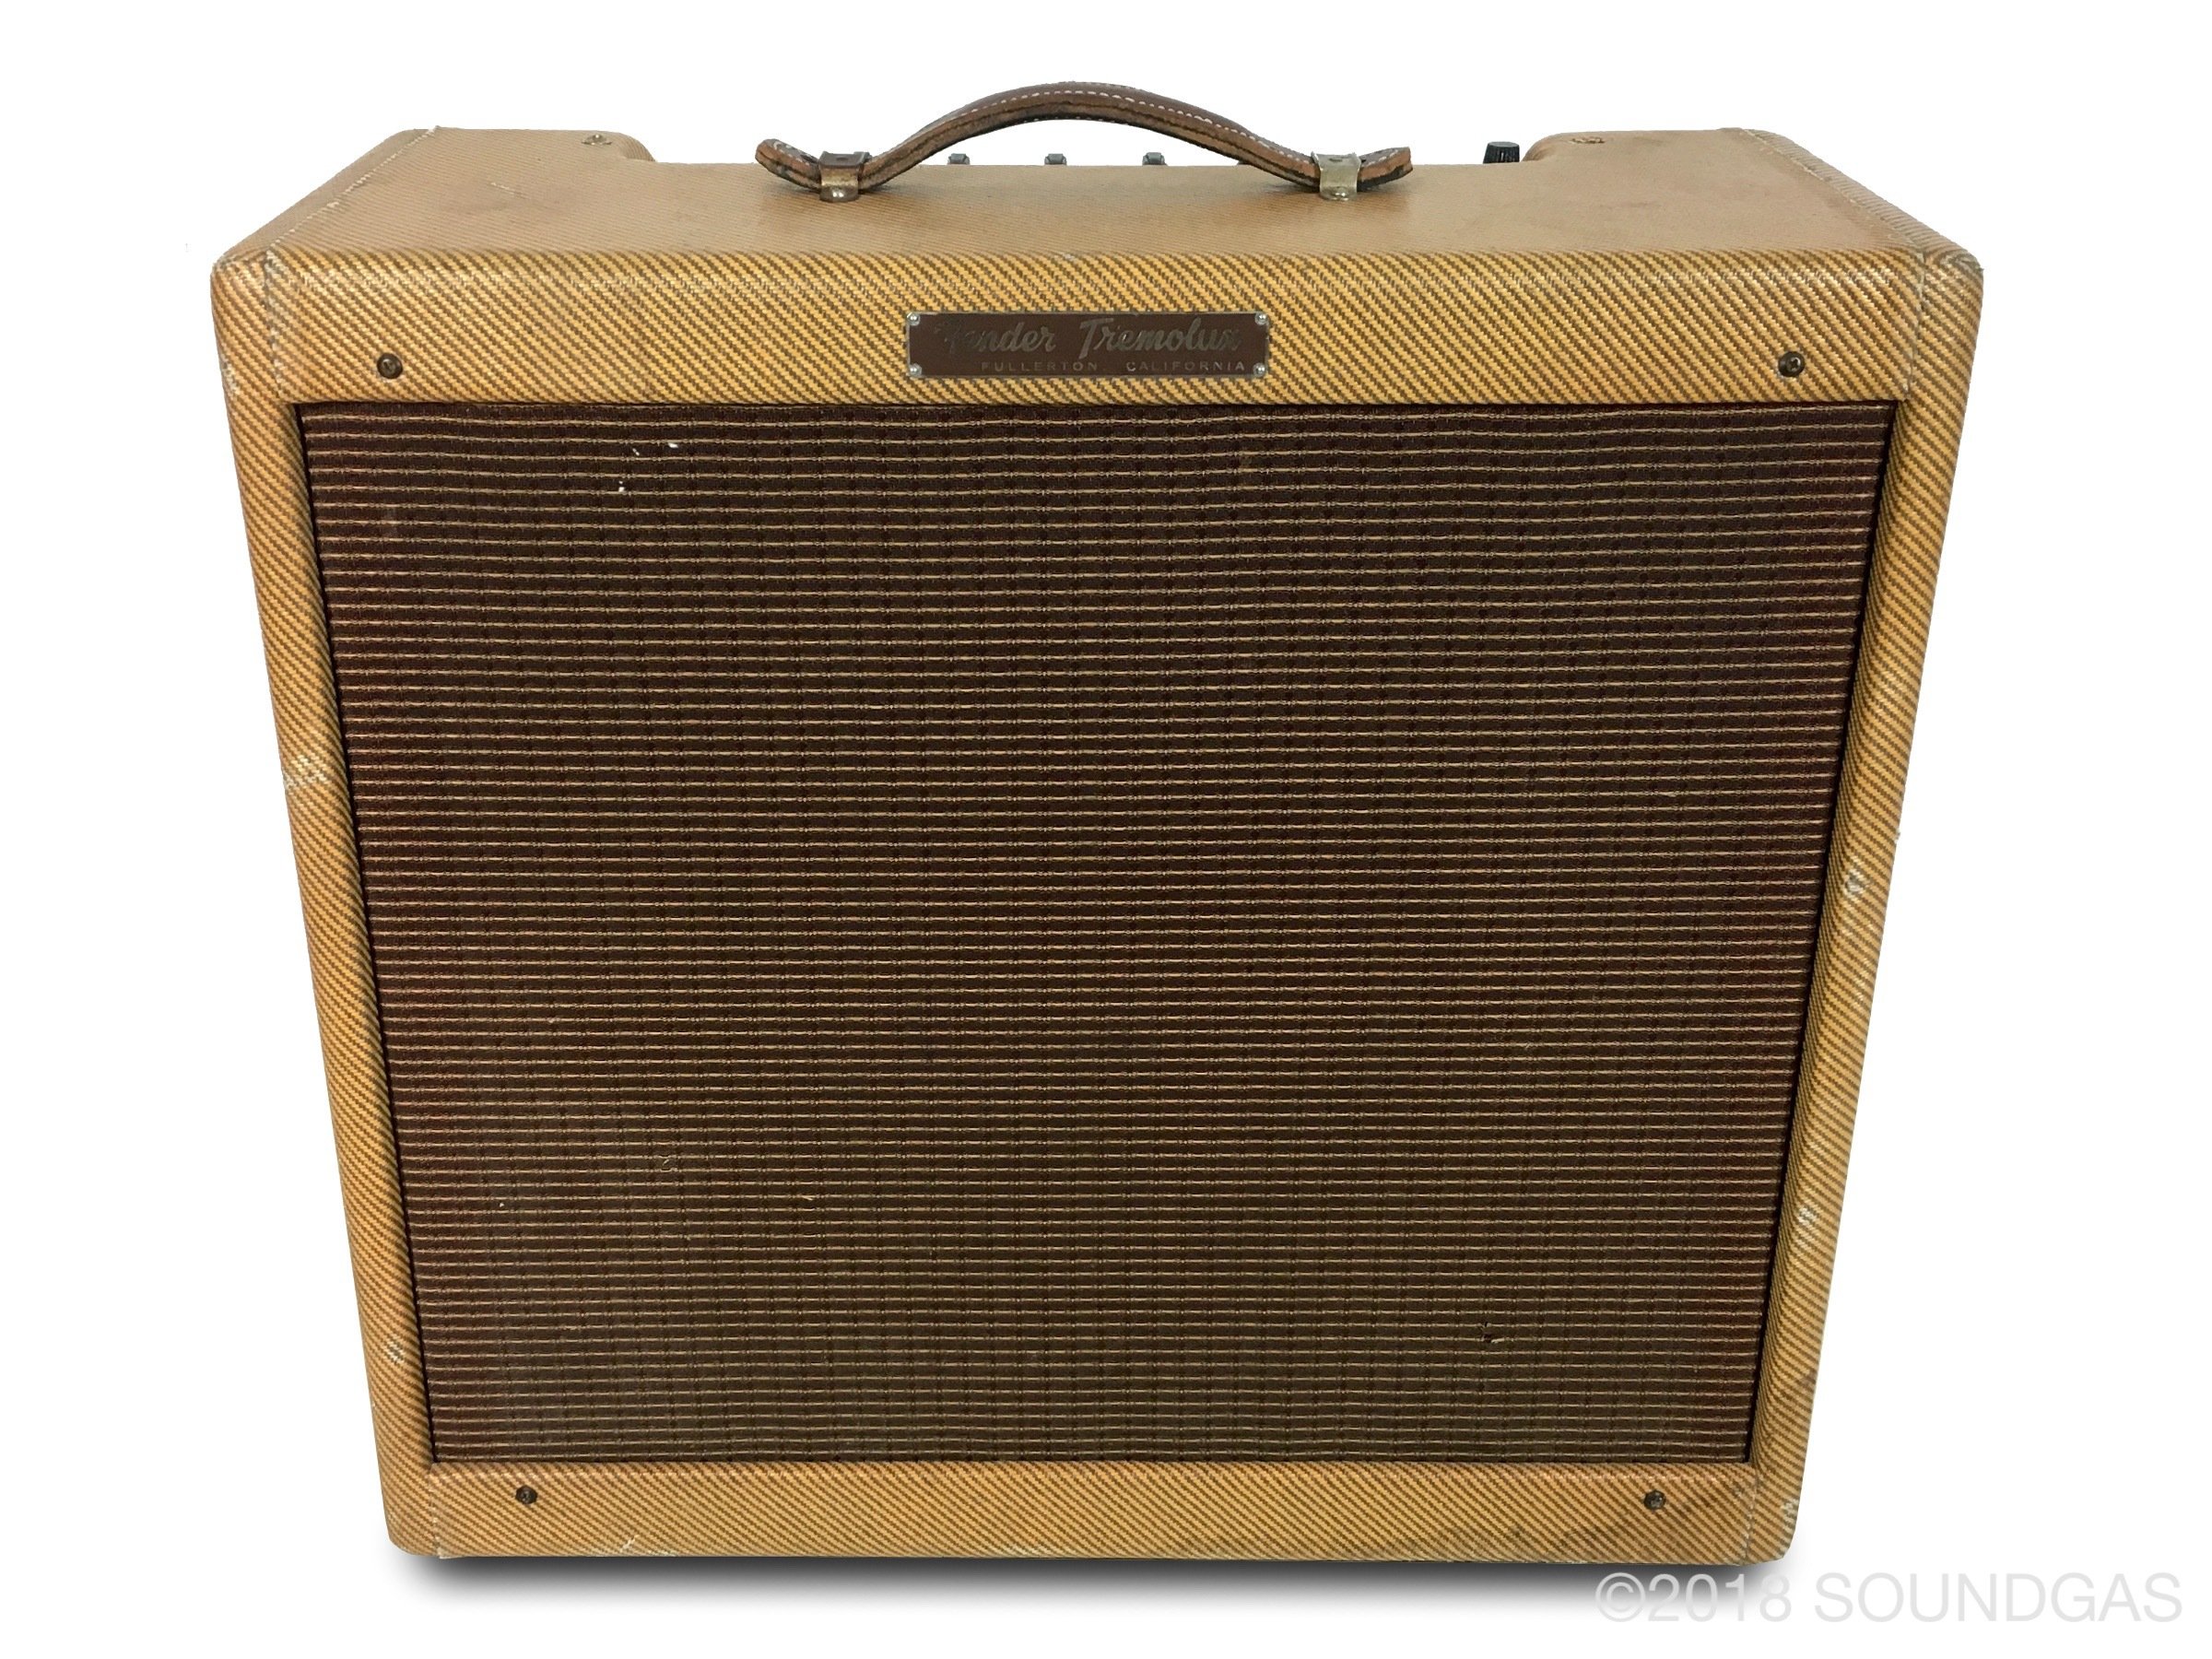 Fender Large Box Tweed Tremolux 5G9 – 1960